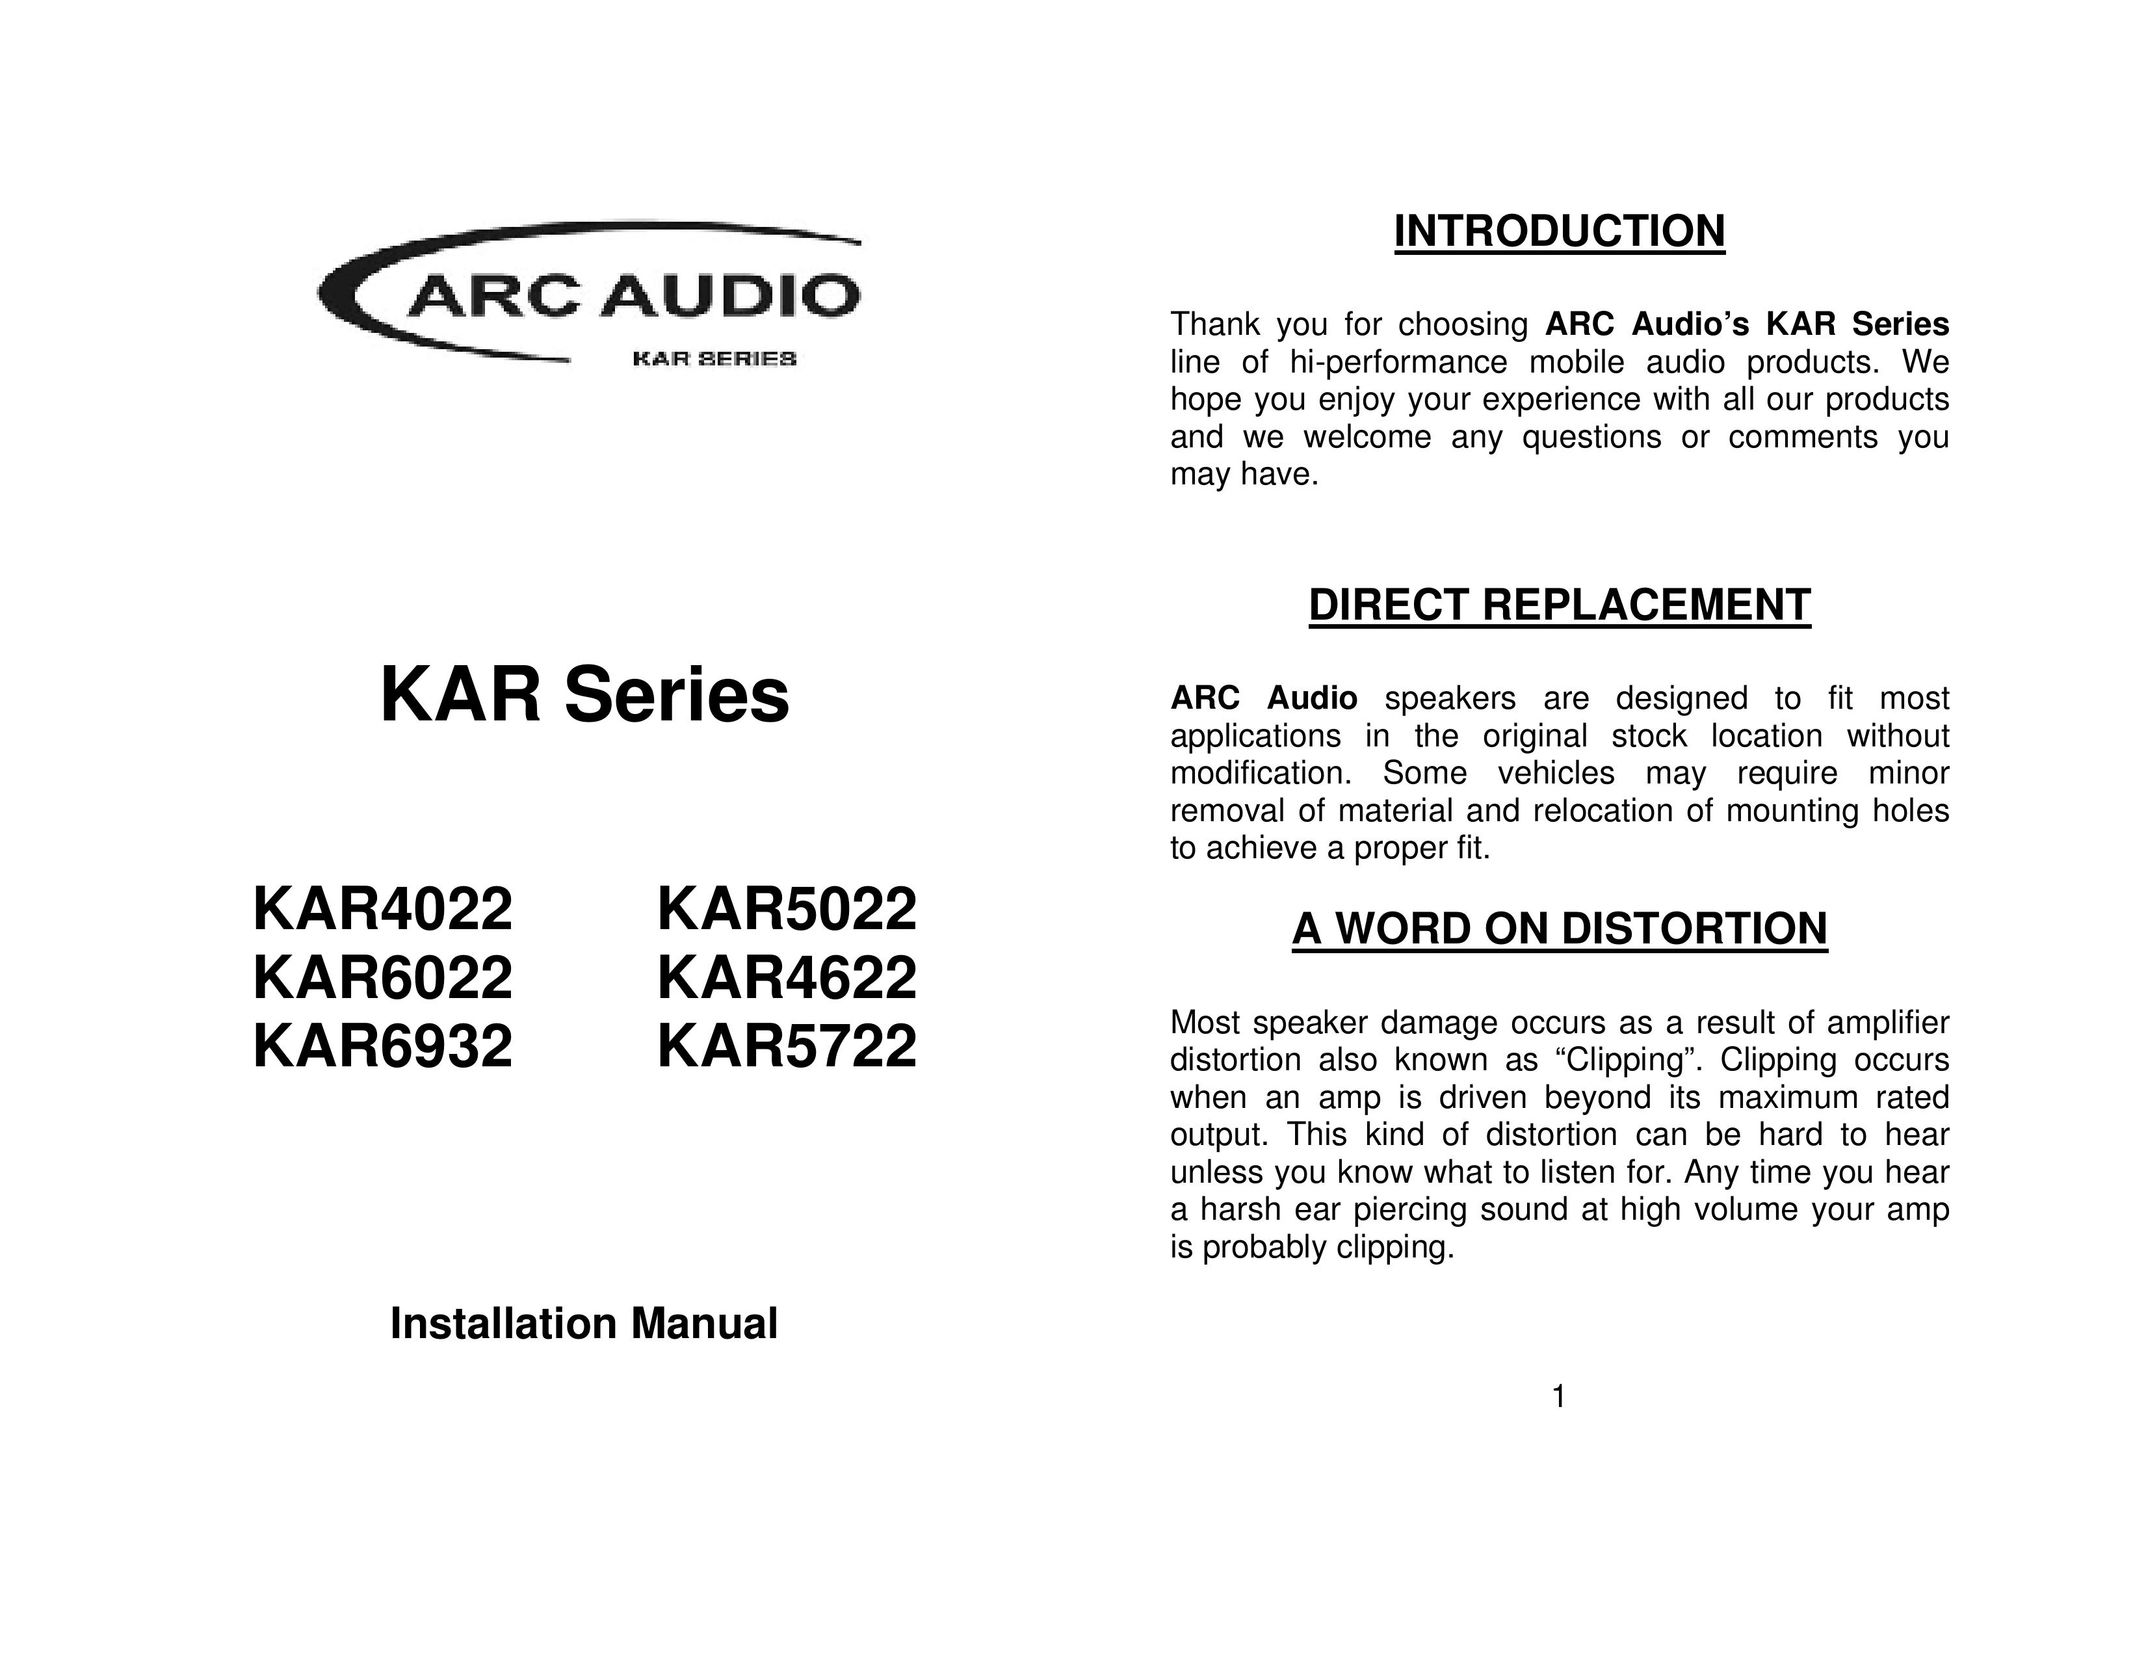 ARC Audio KAR6932 Car Stereo System User Manual